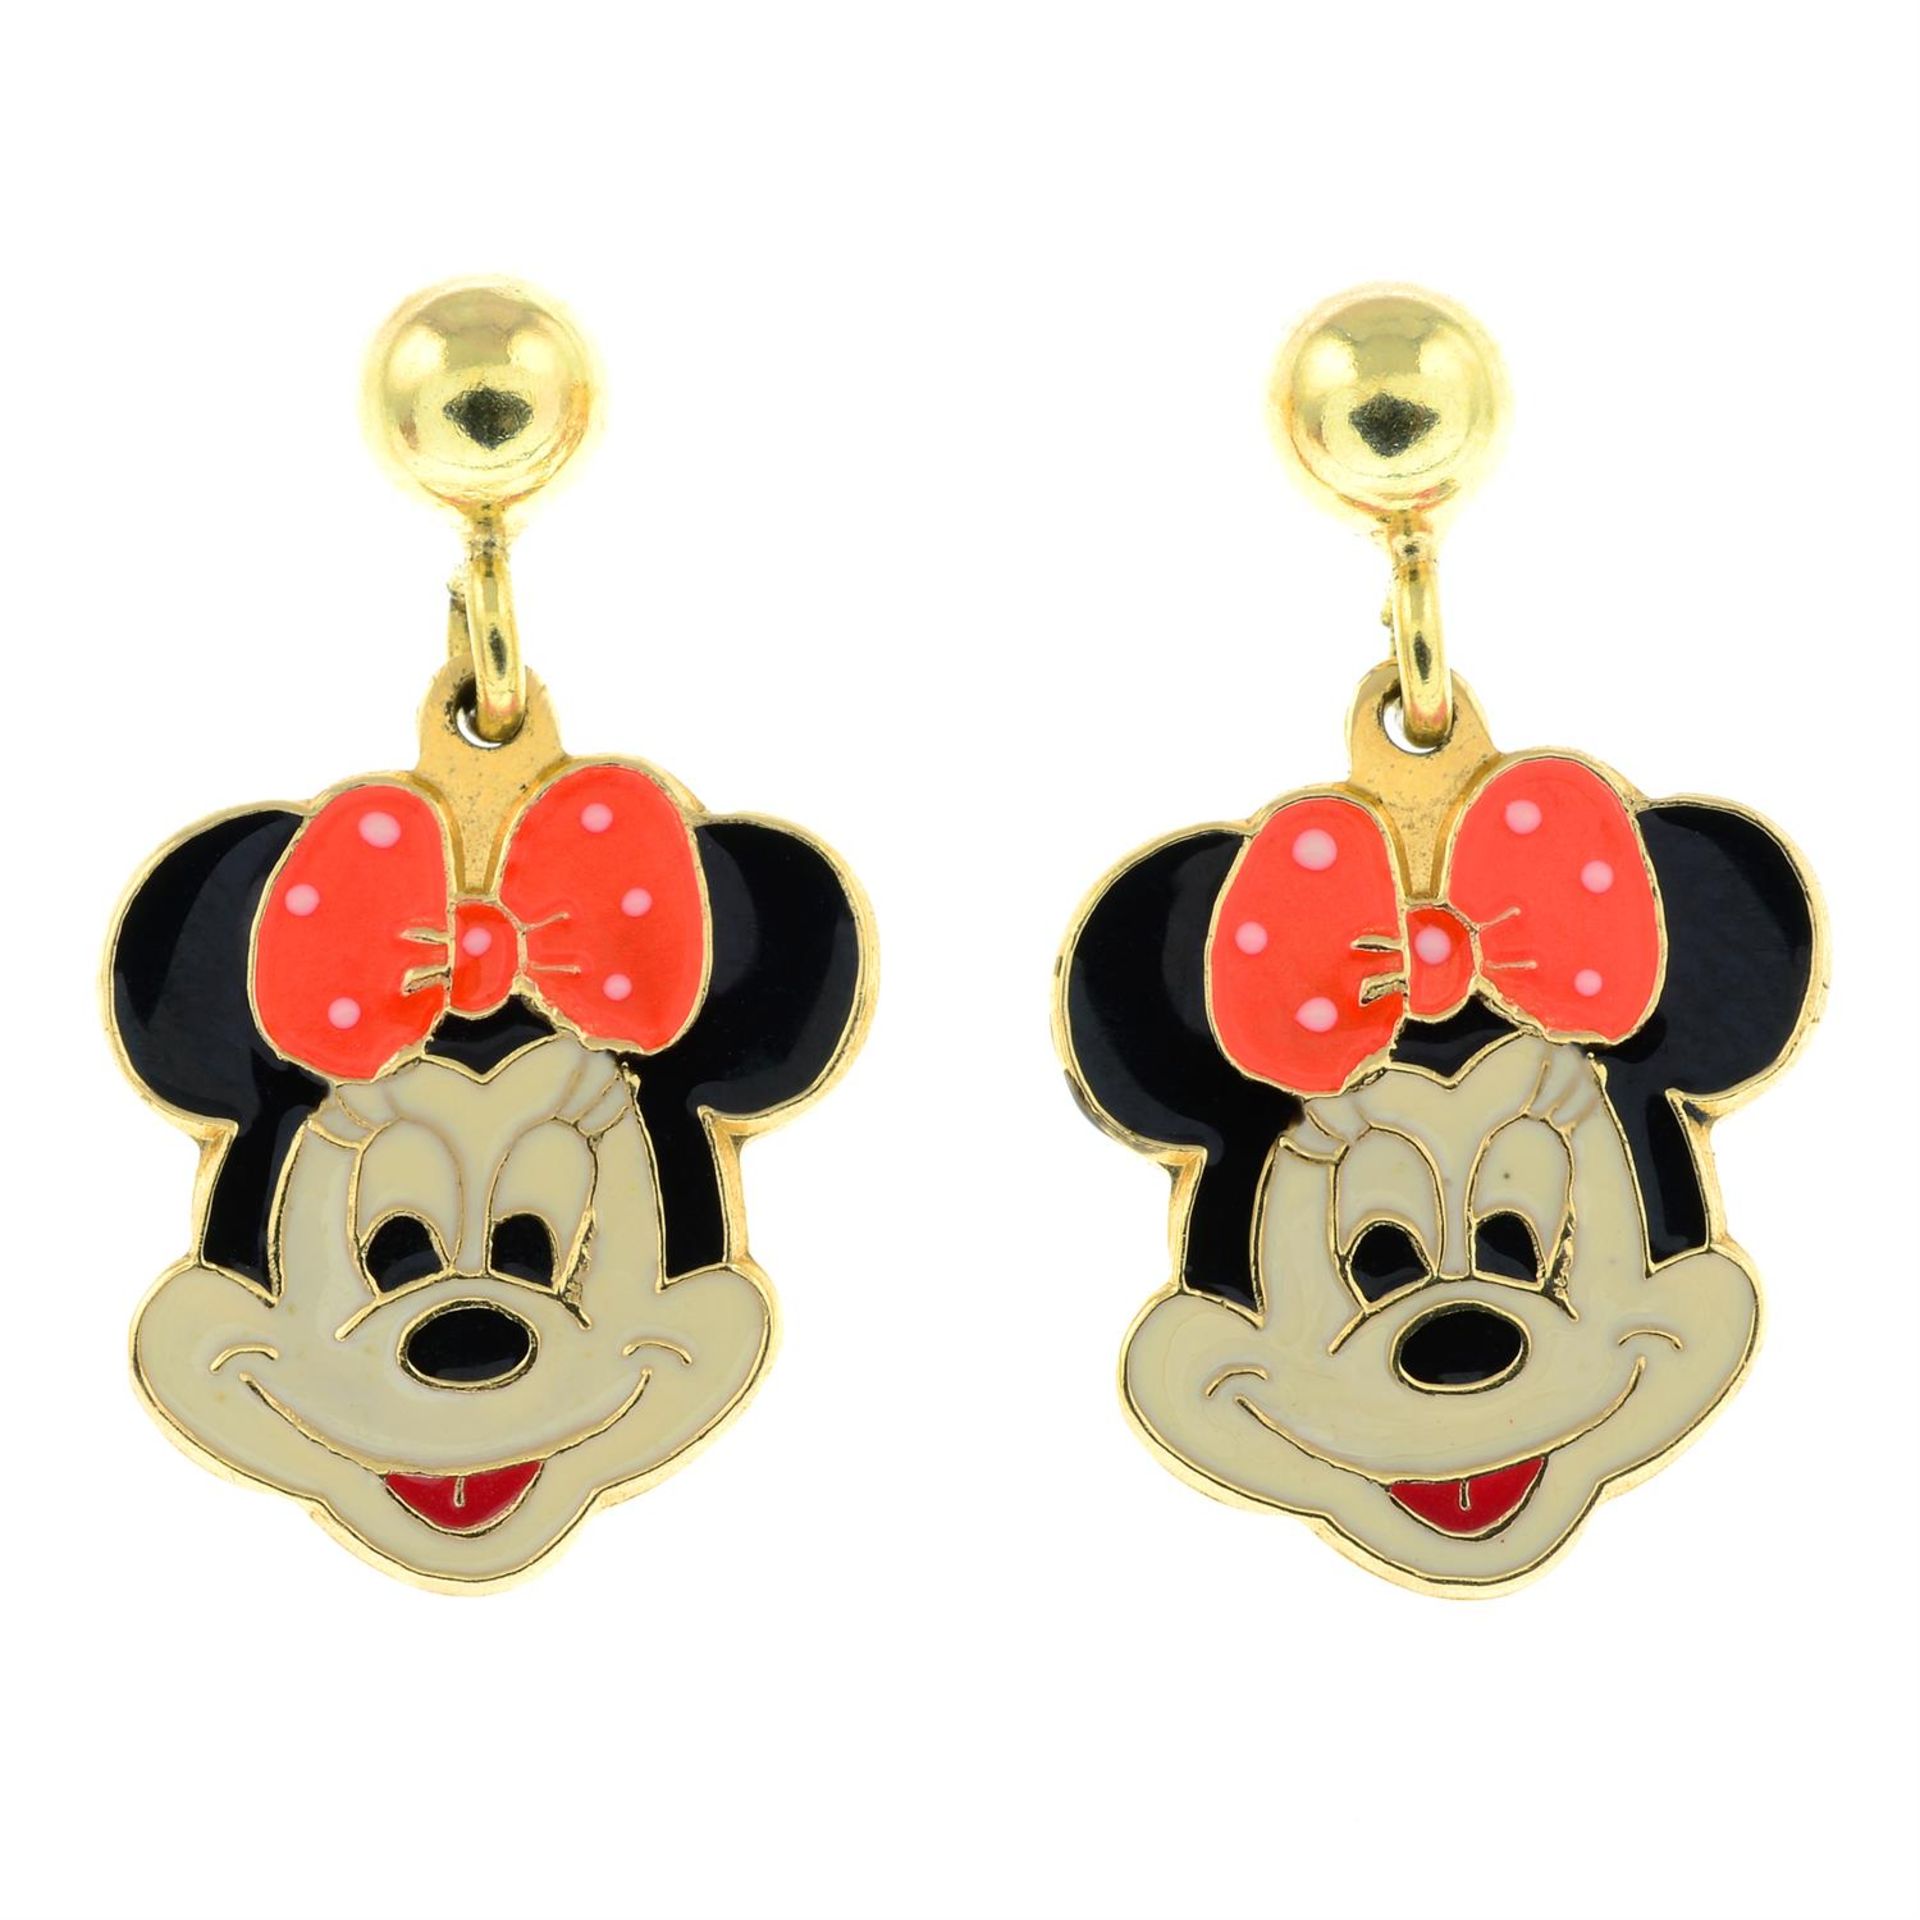 A pair of Minnie Mouse enamel earrings, by Disney